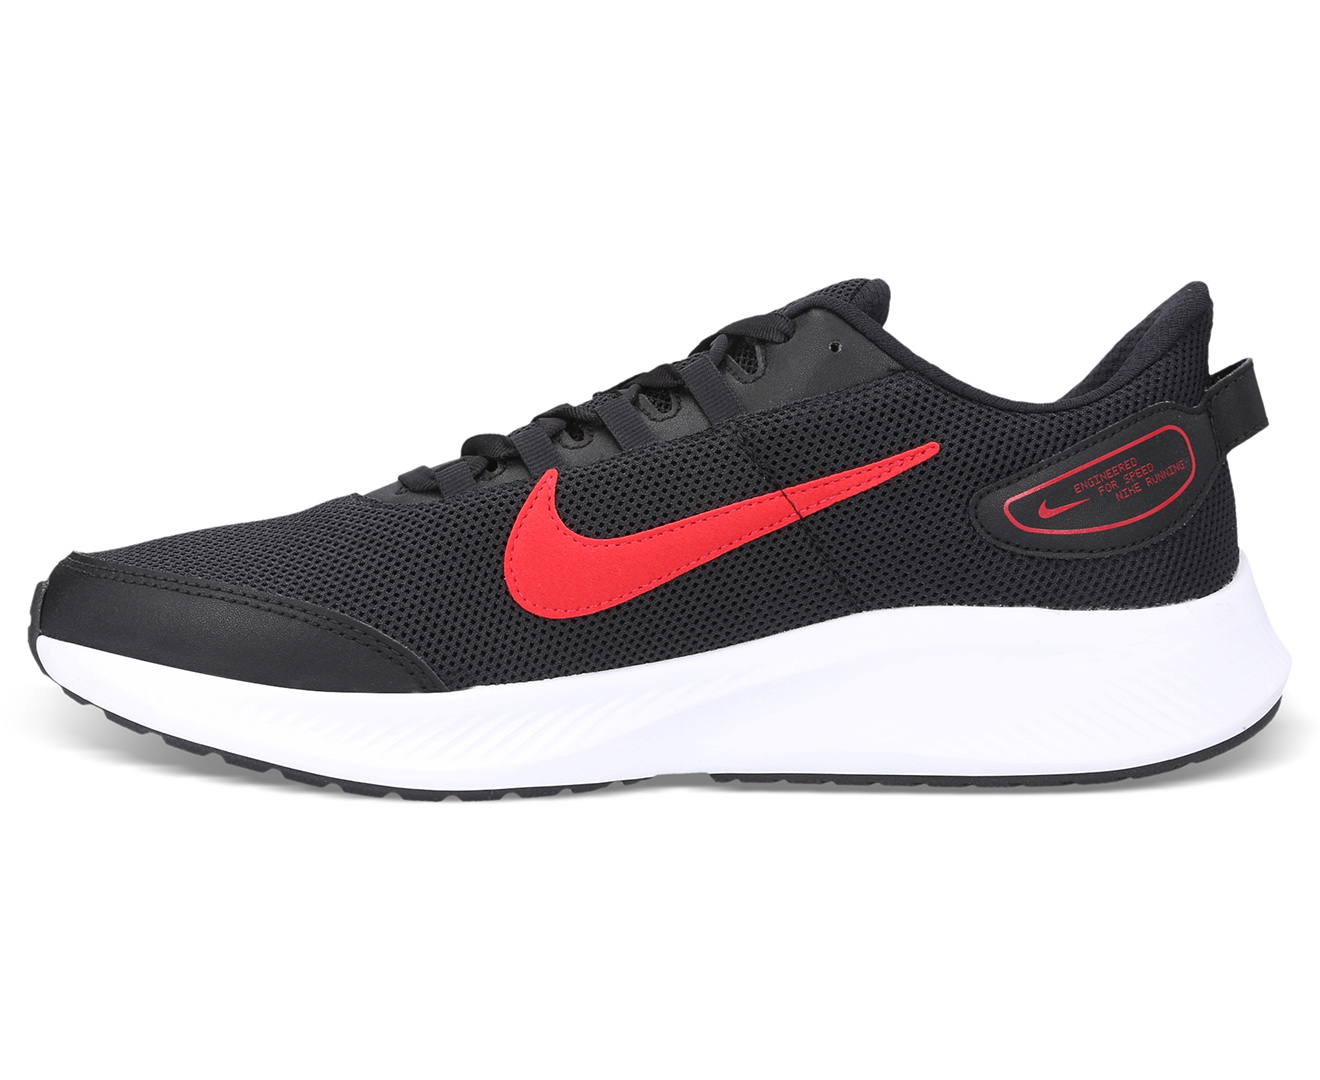 Nike Men's Runallday 2 Running Shoes - Black/University Red/White ...